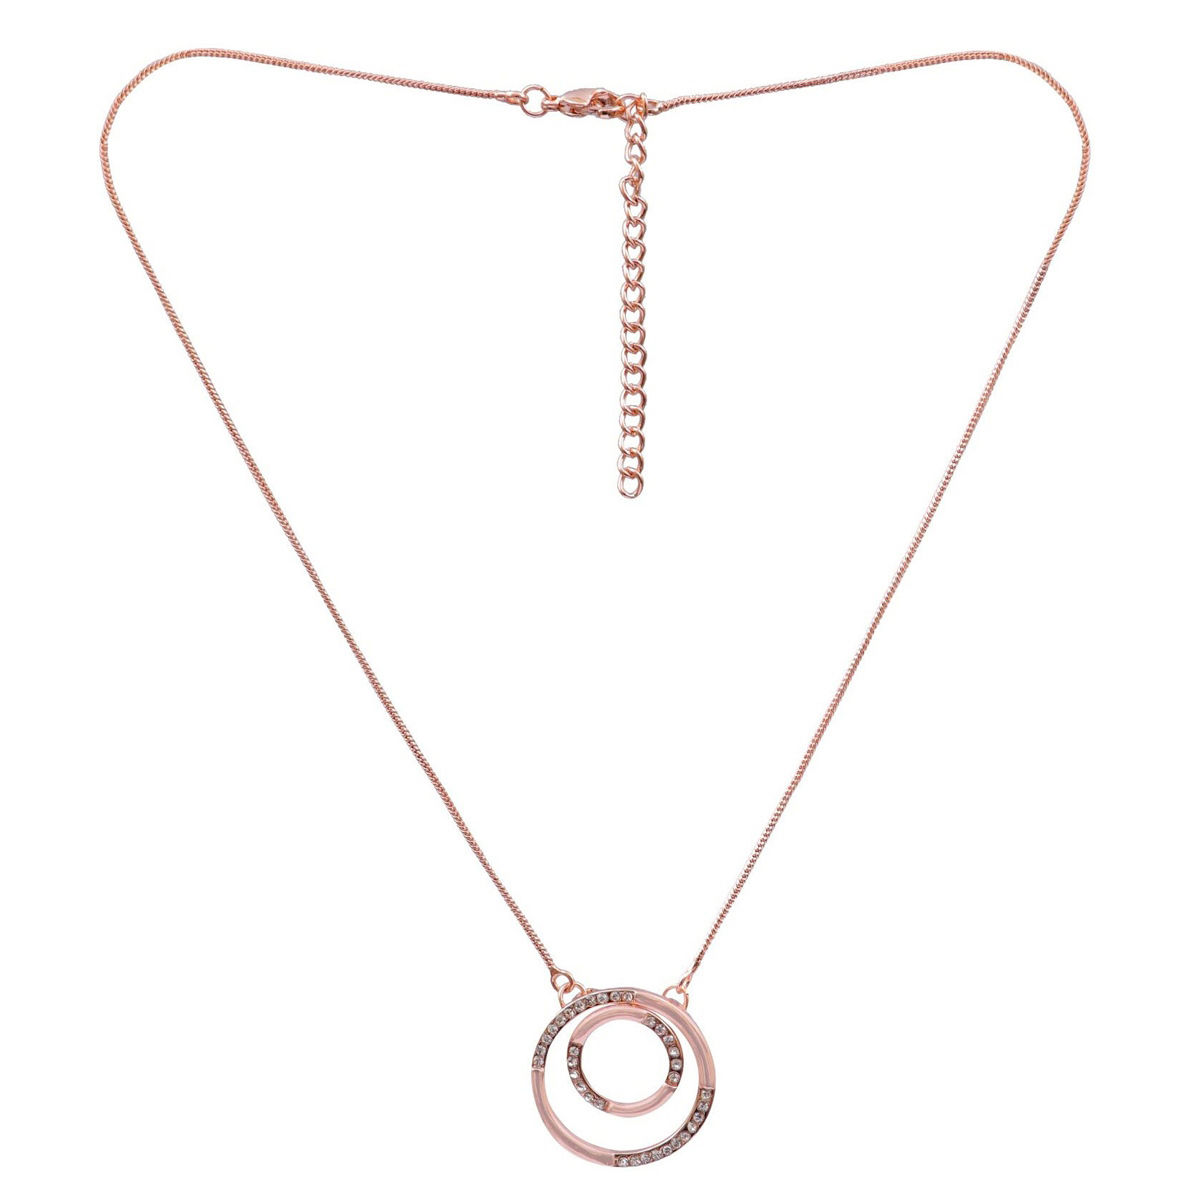 Crystal Necklace | Crystal necklace, Crystals, Circle pendant